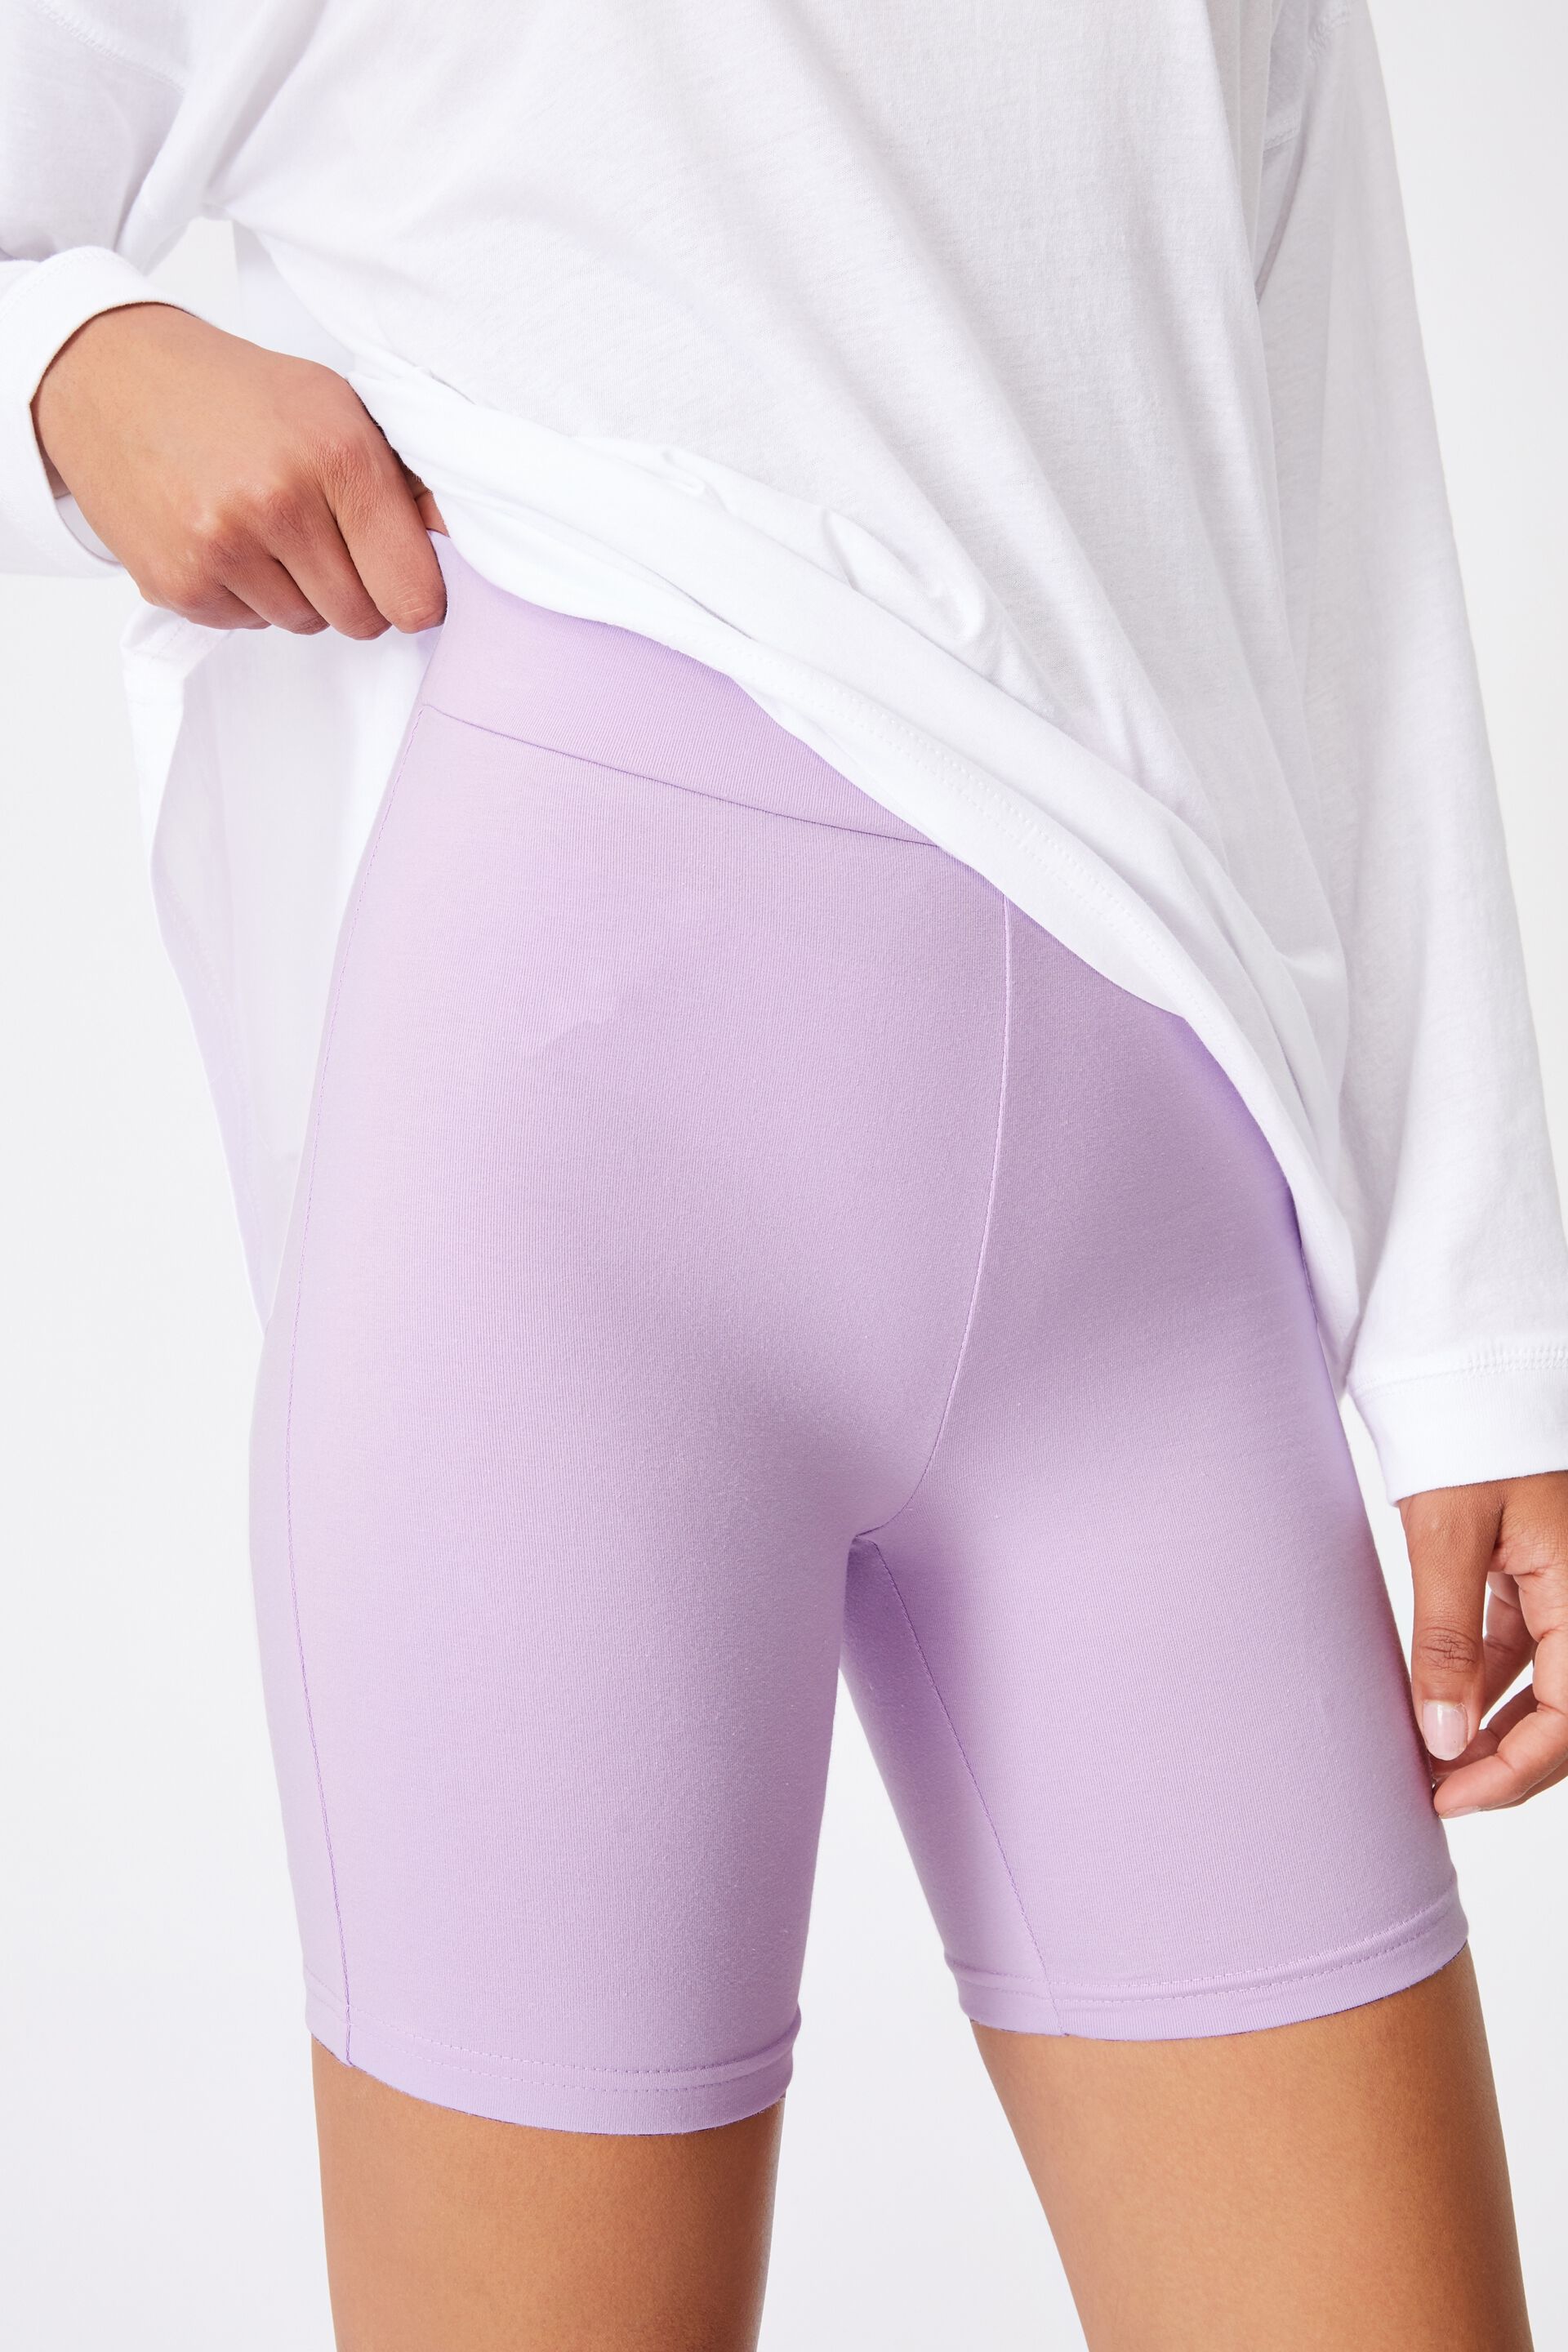 lilac biker shorts